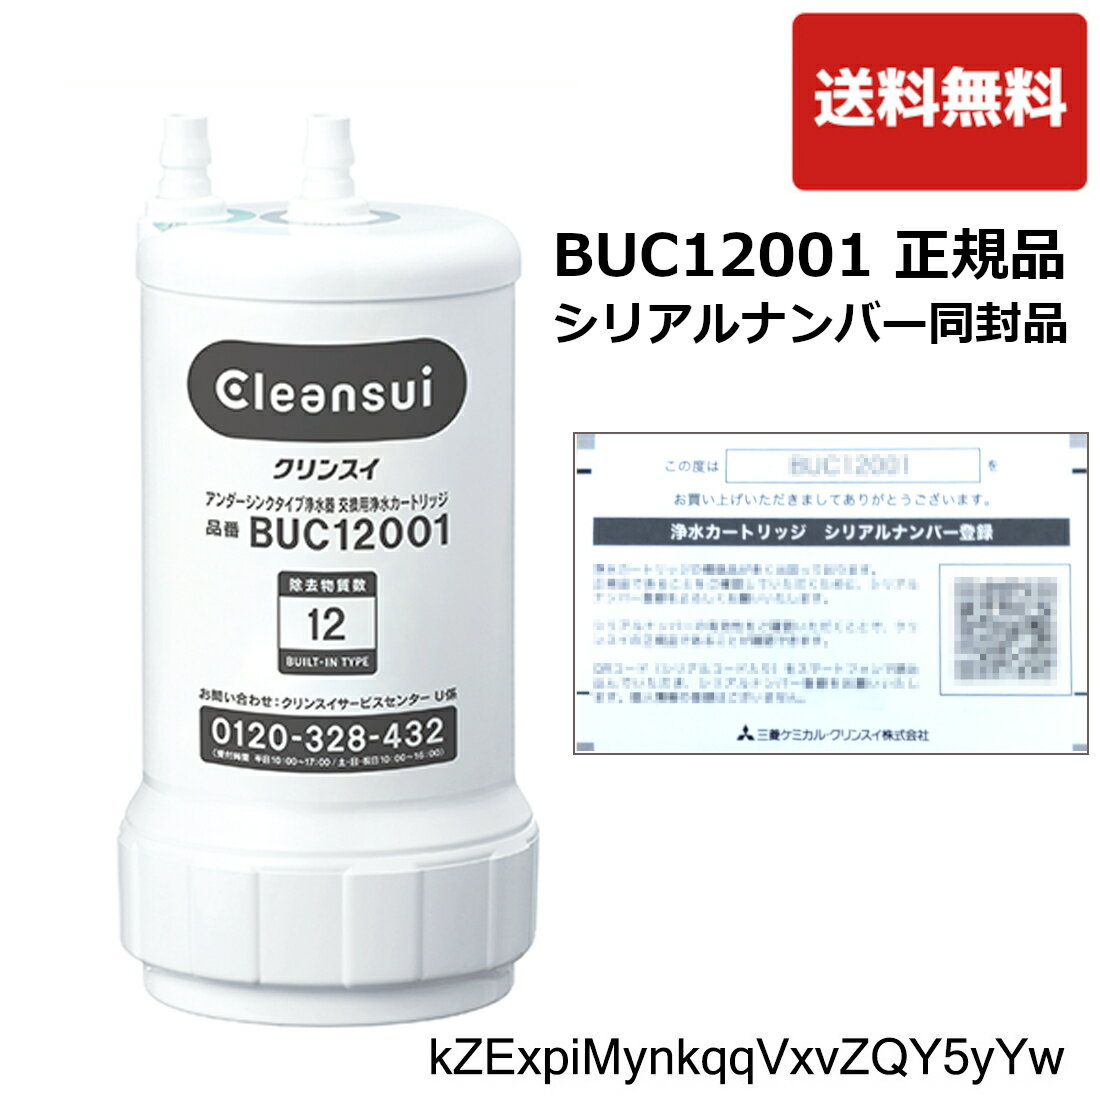 BUC12001：正規品確認シリアルカード